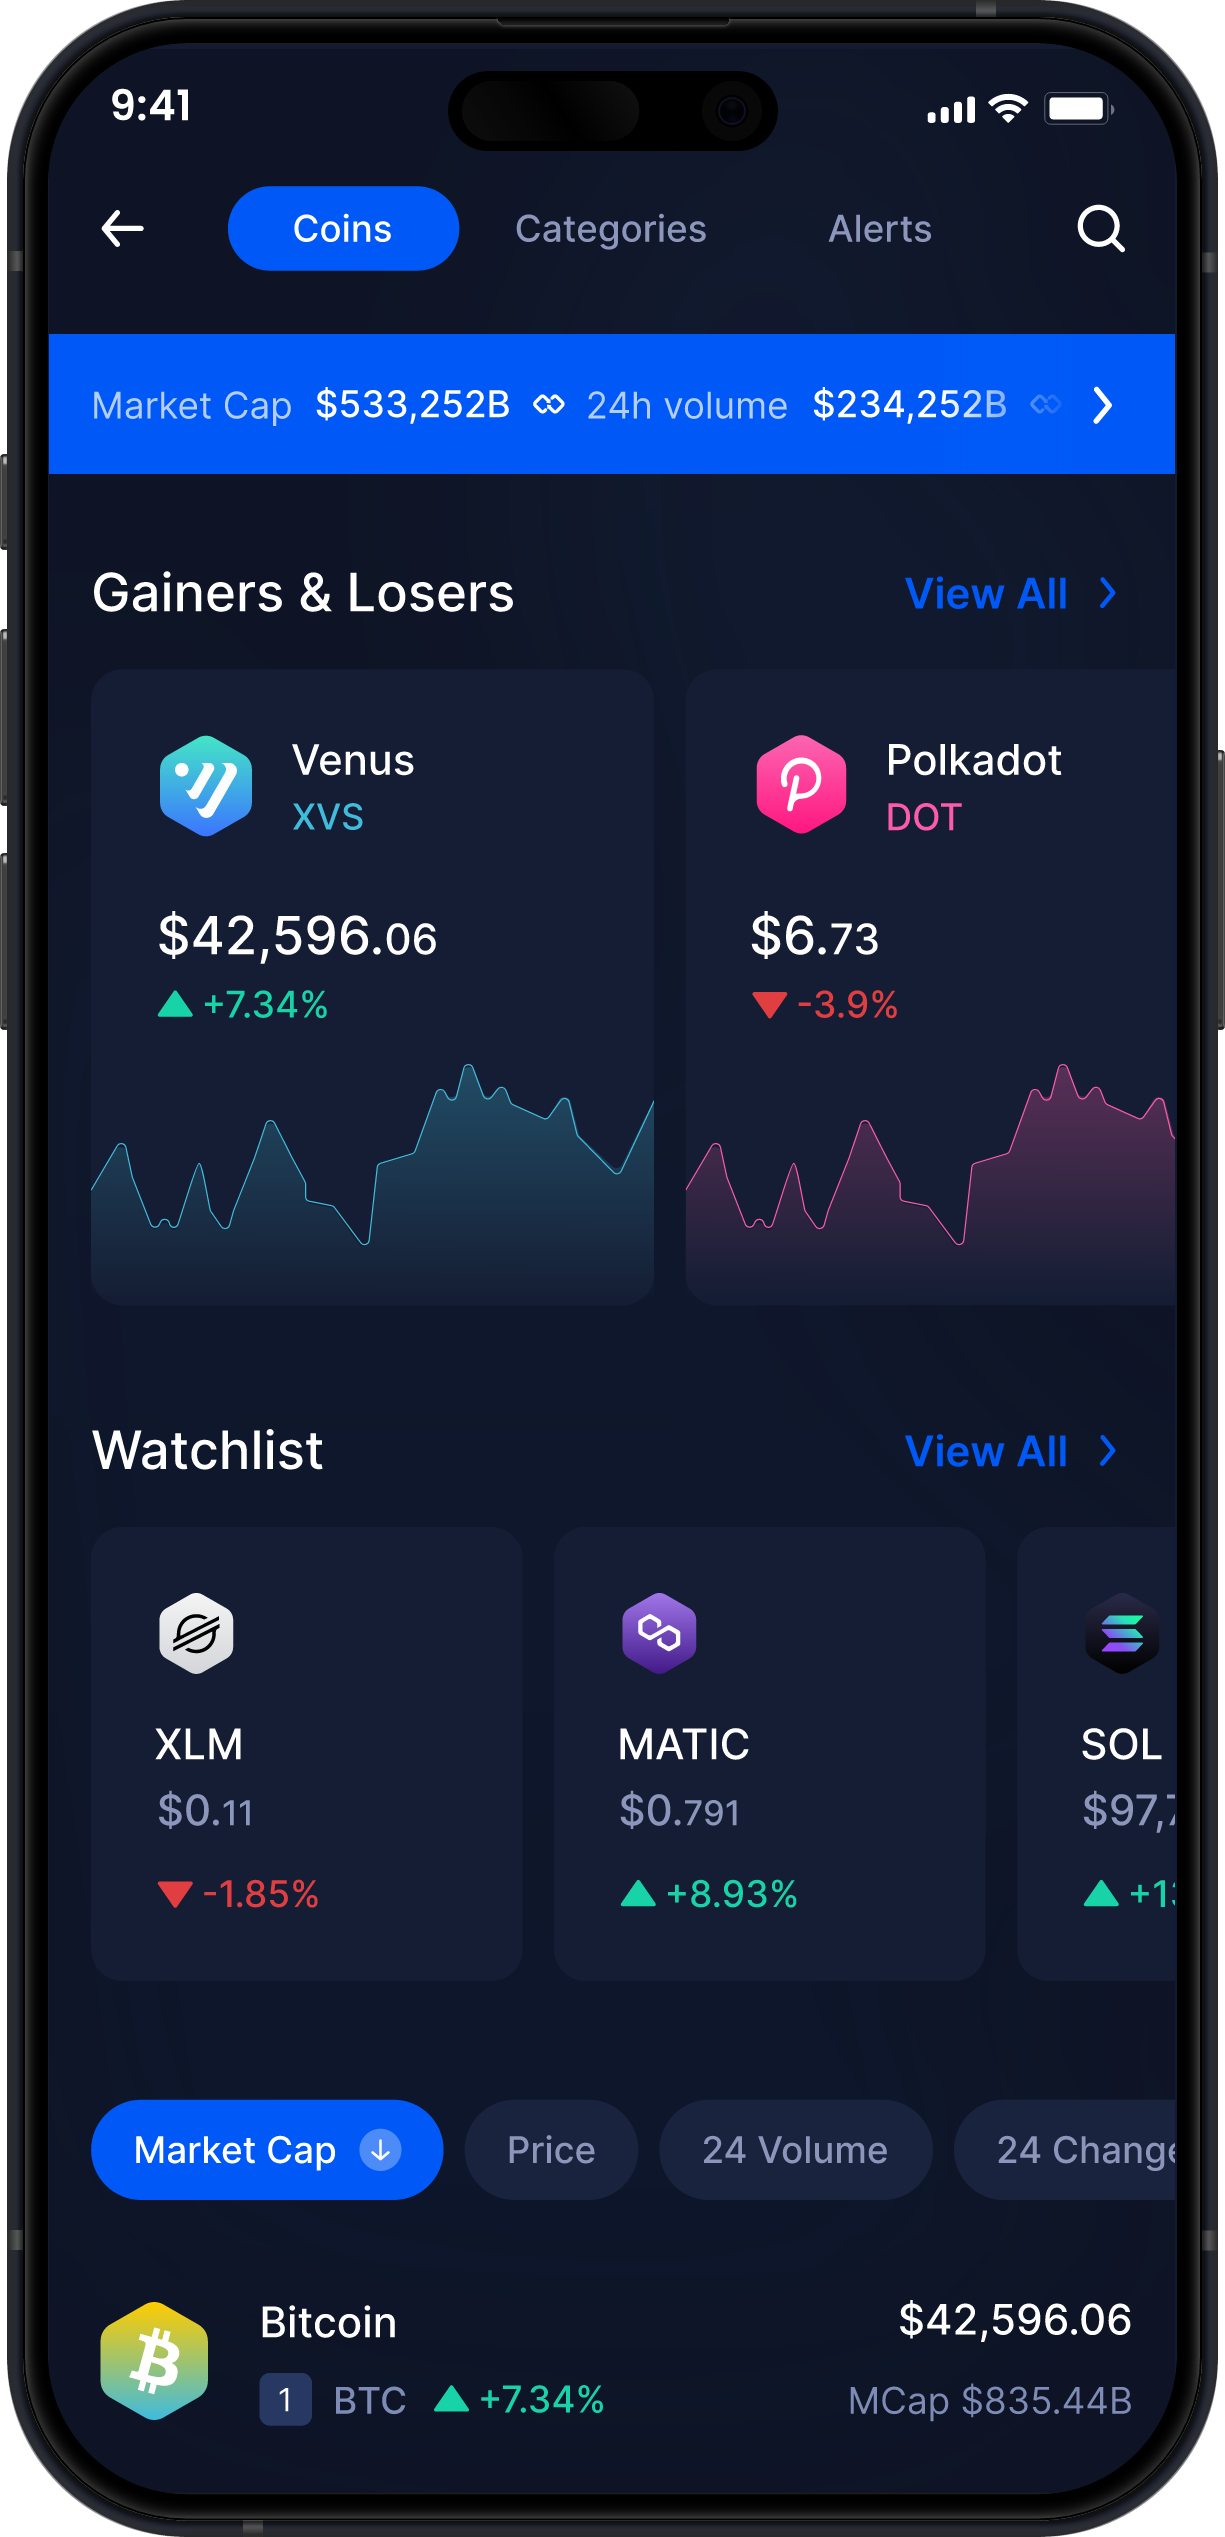 Infinity Mobile Venus Wallet - XVS Market Stats & Tracker